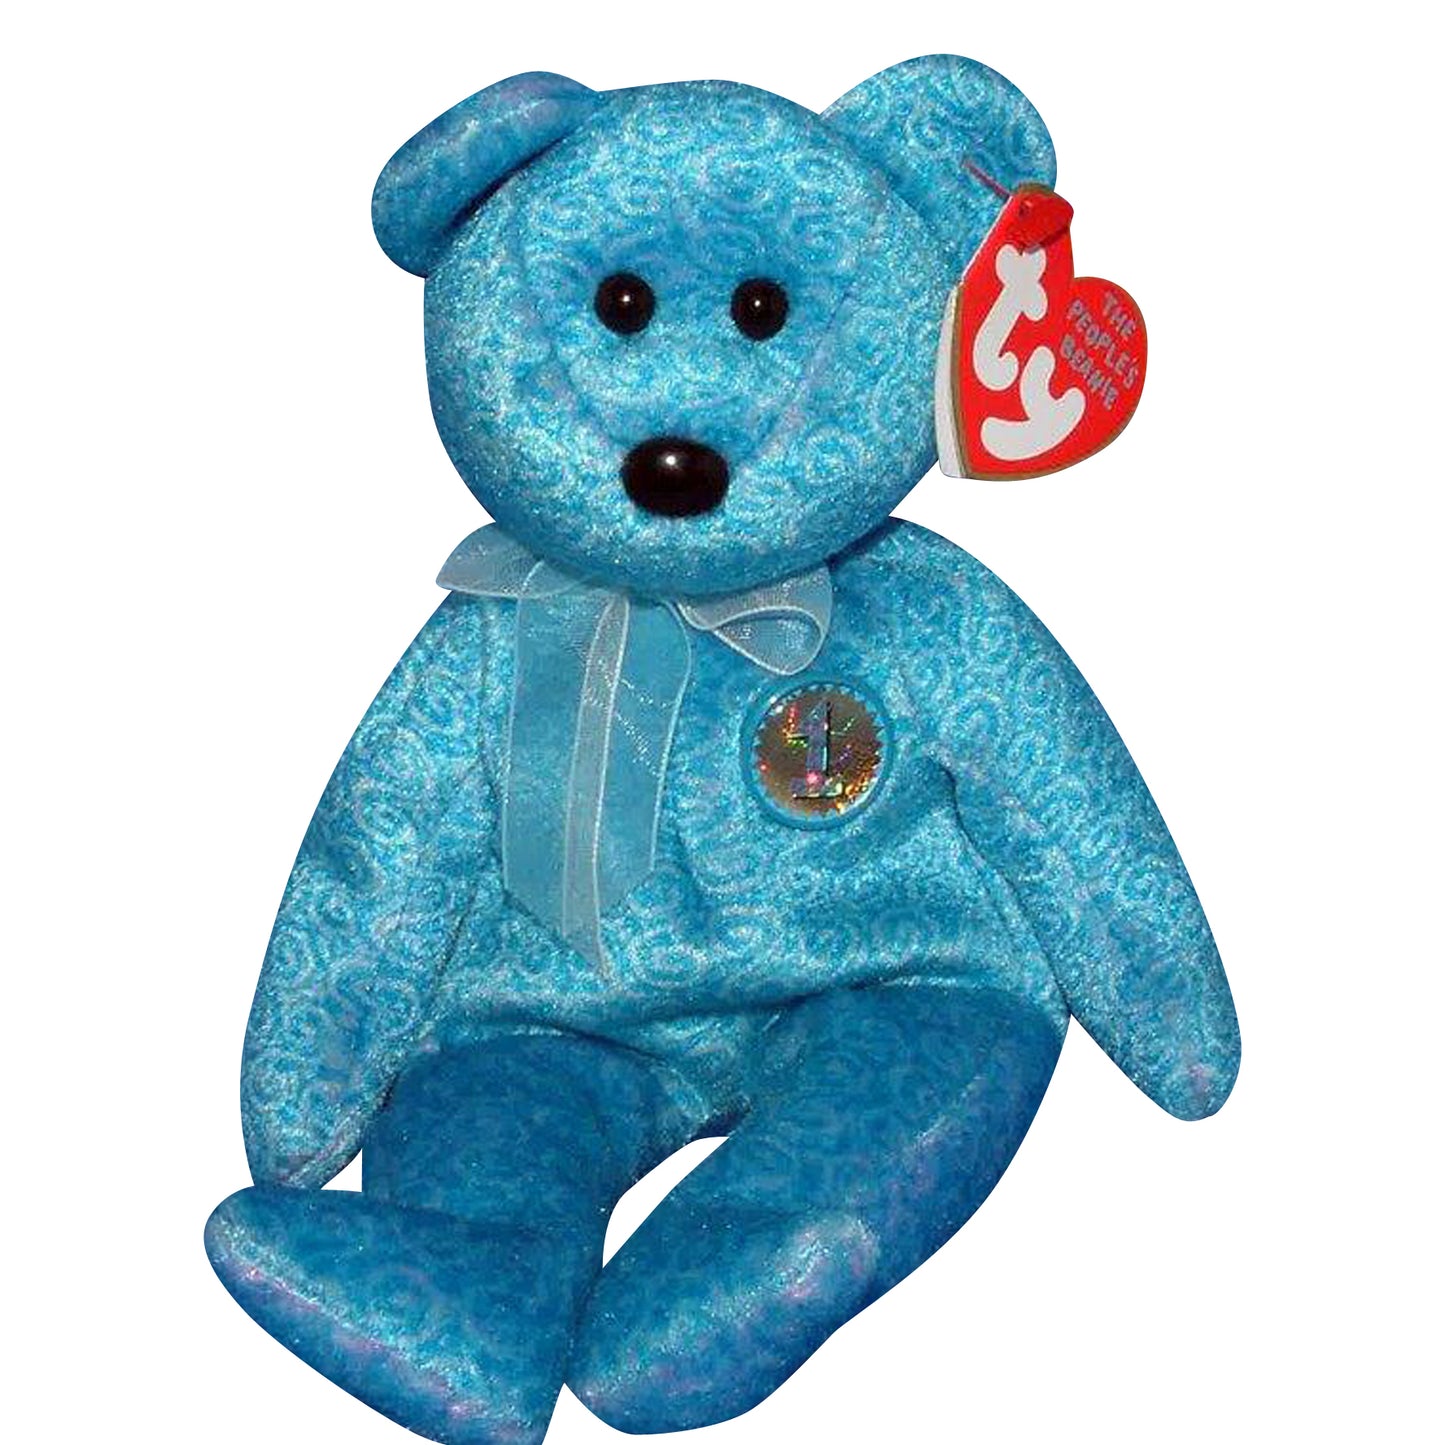 Ty Beanie Baby: Classy the Bear